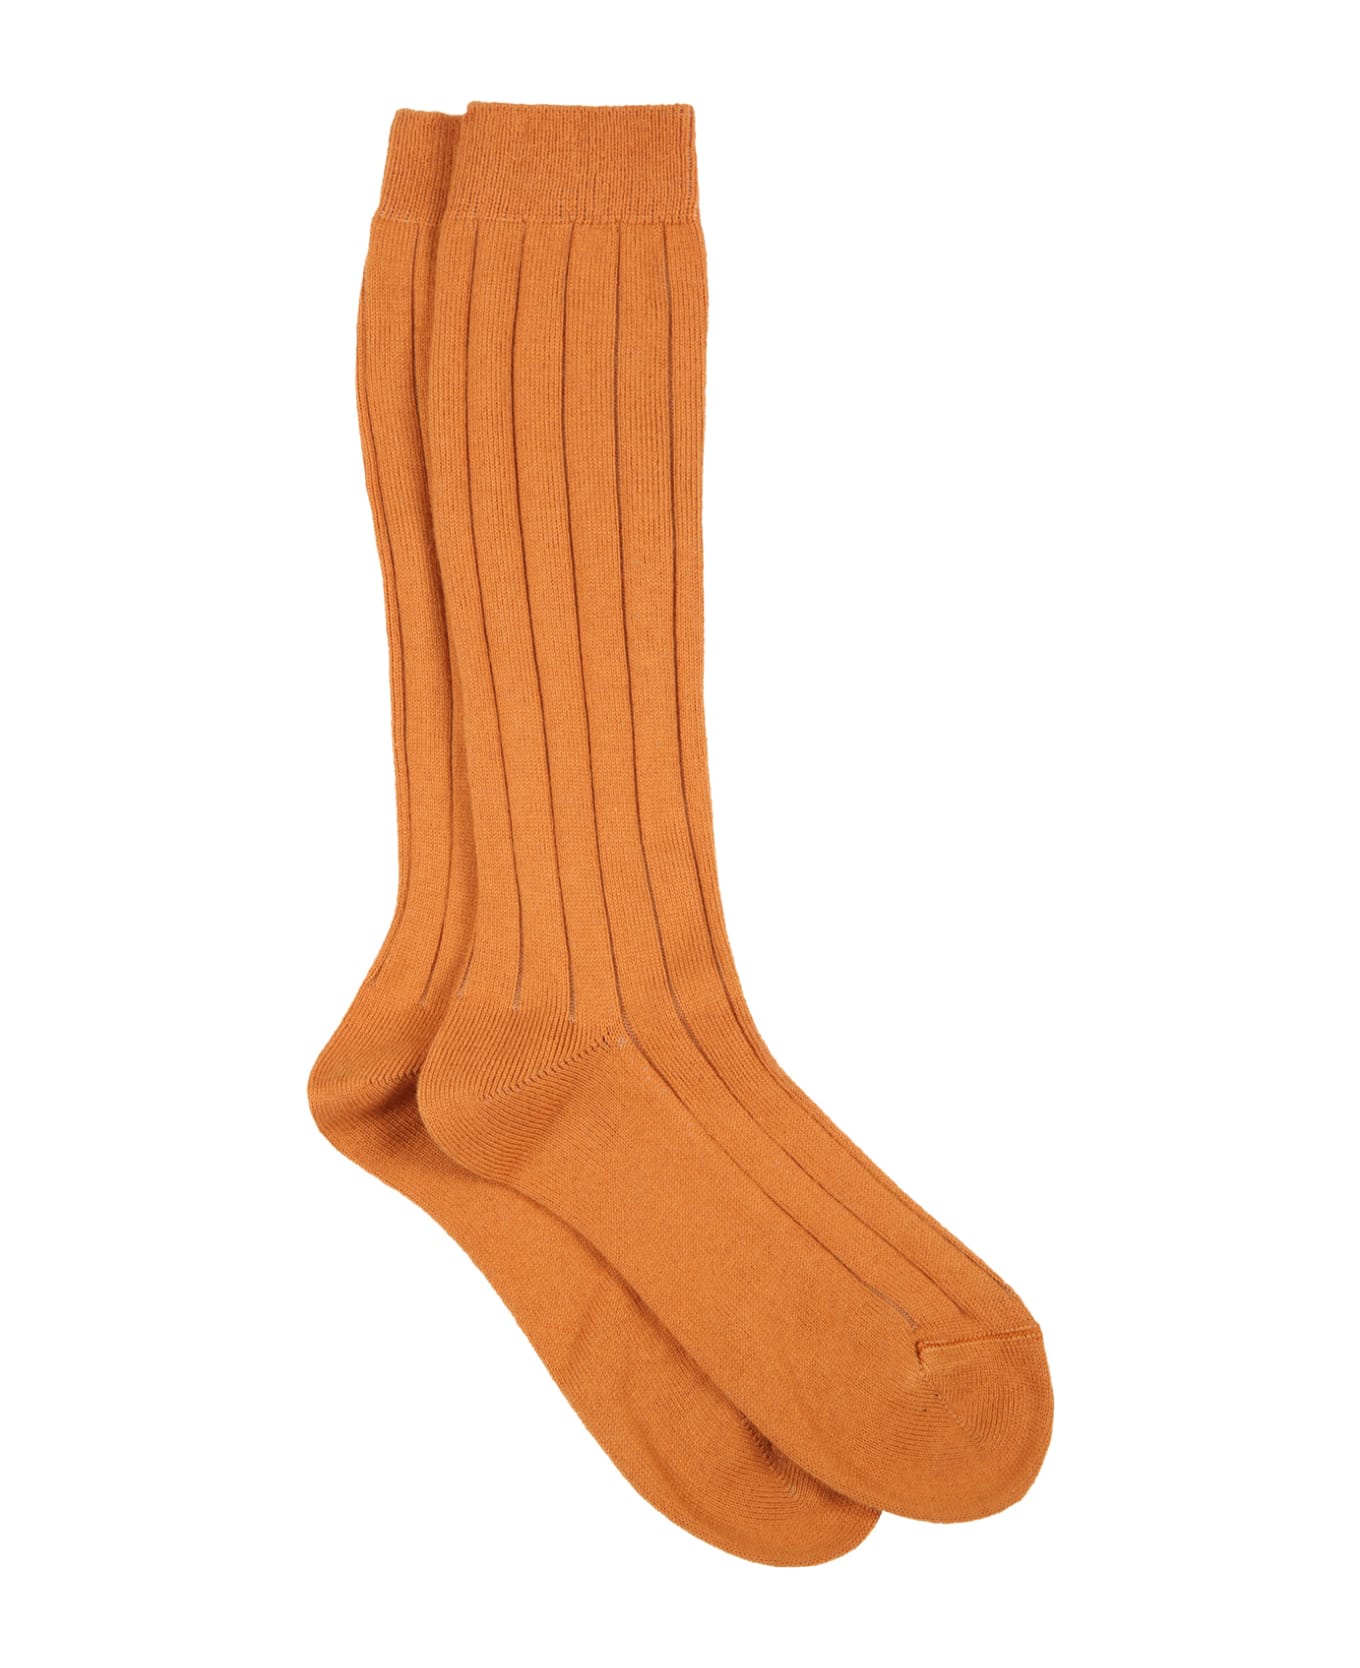 Story Loris Orange Socks For Kids - Orange シューズ